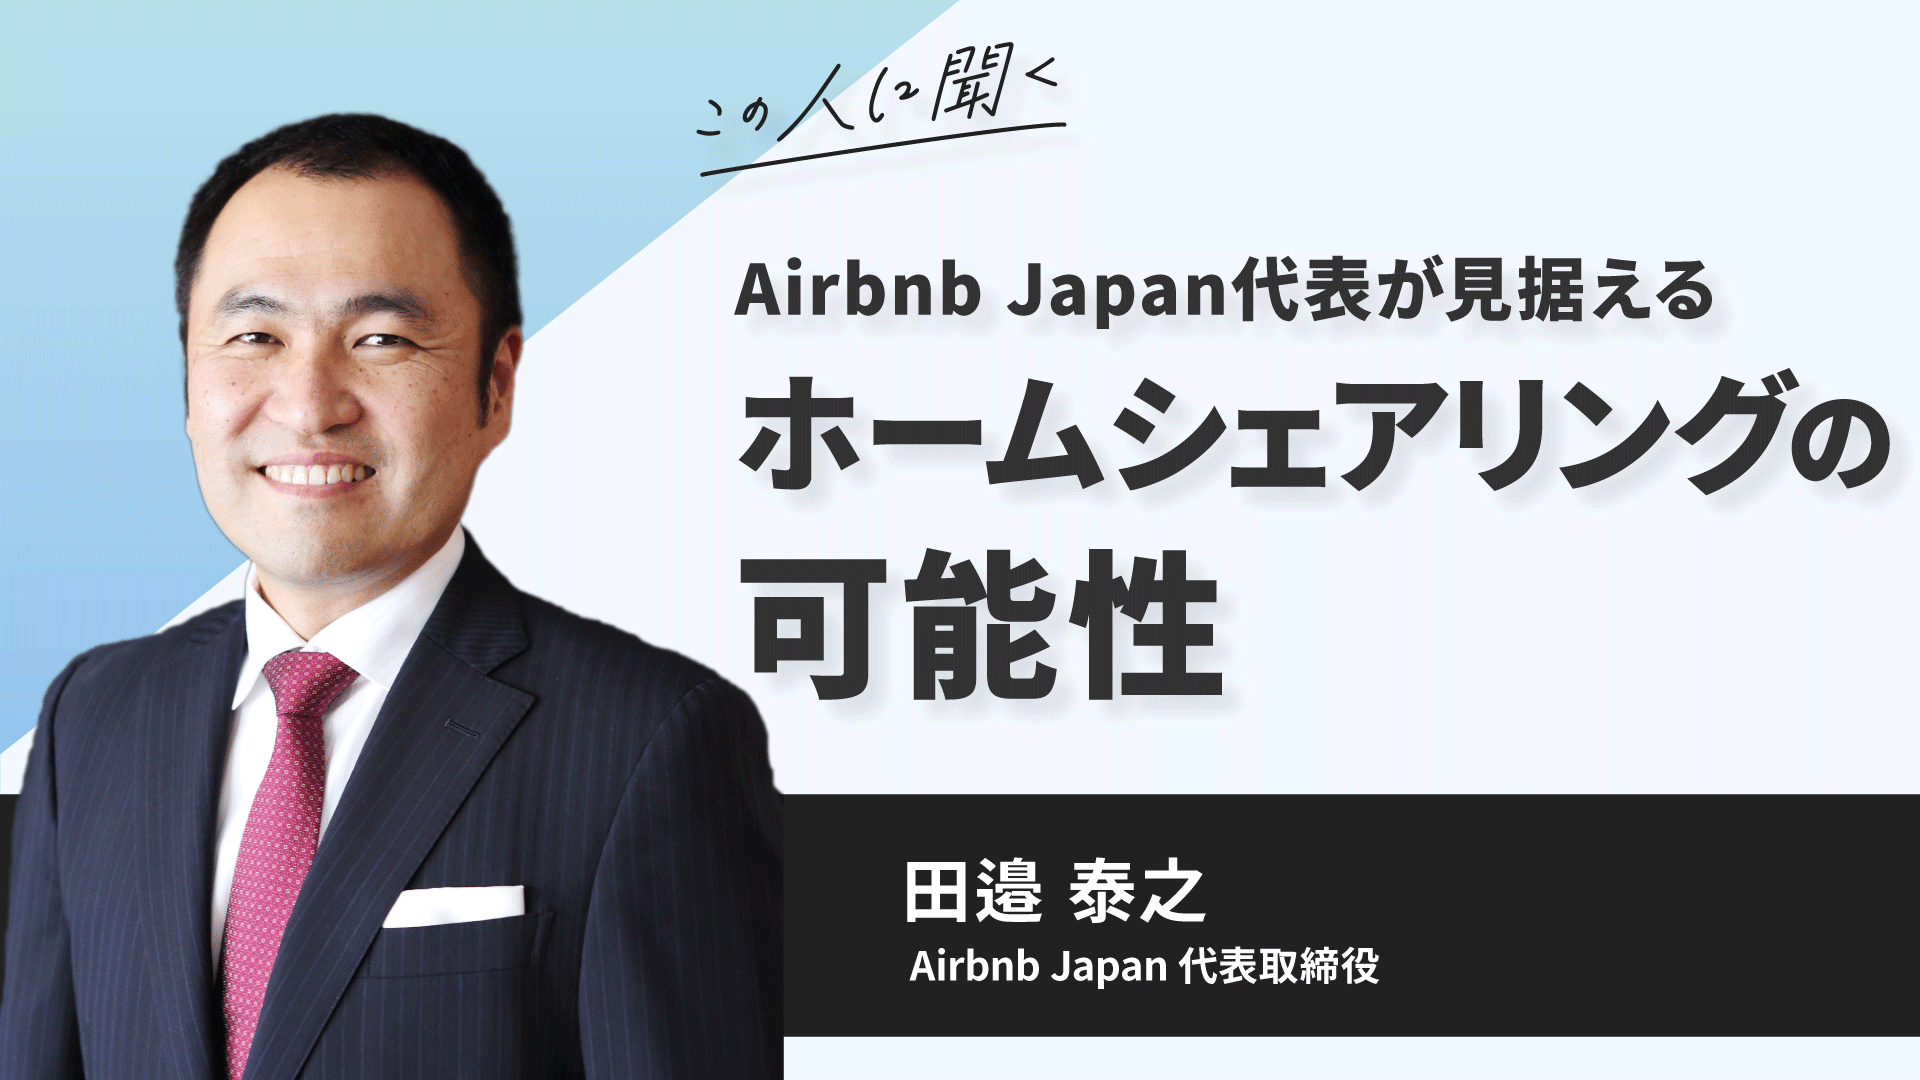 Airbnb Japan代表が見据える、ホームシェアリングの可能性 〜田邉泰之氏(Airbnb Japan株式会社 代表取締役)